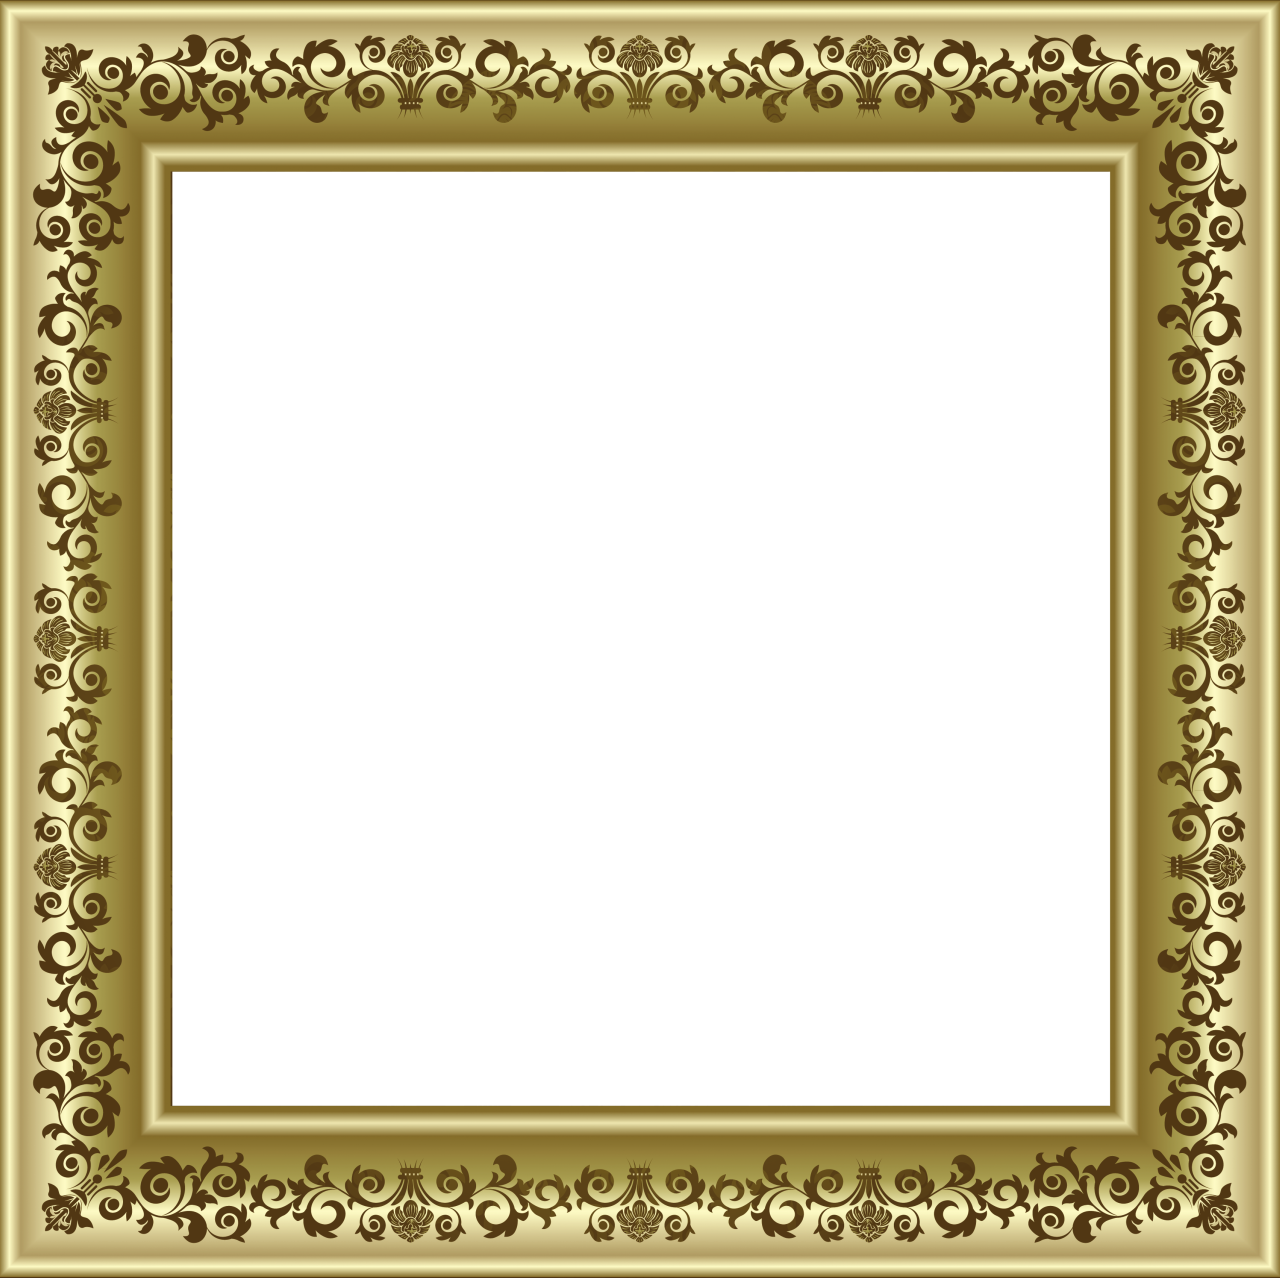 Download PNG image - Square Christmas Frame PNG Transparent Image 